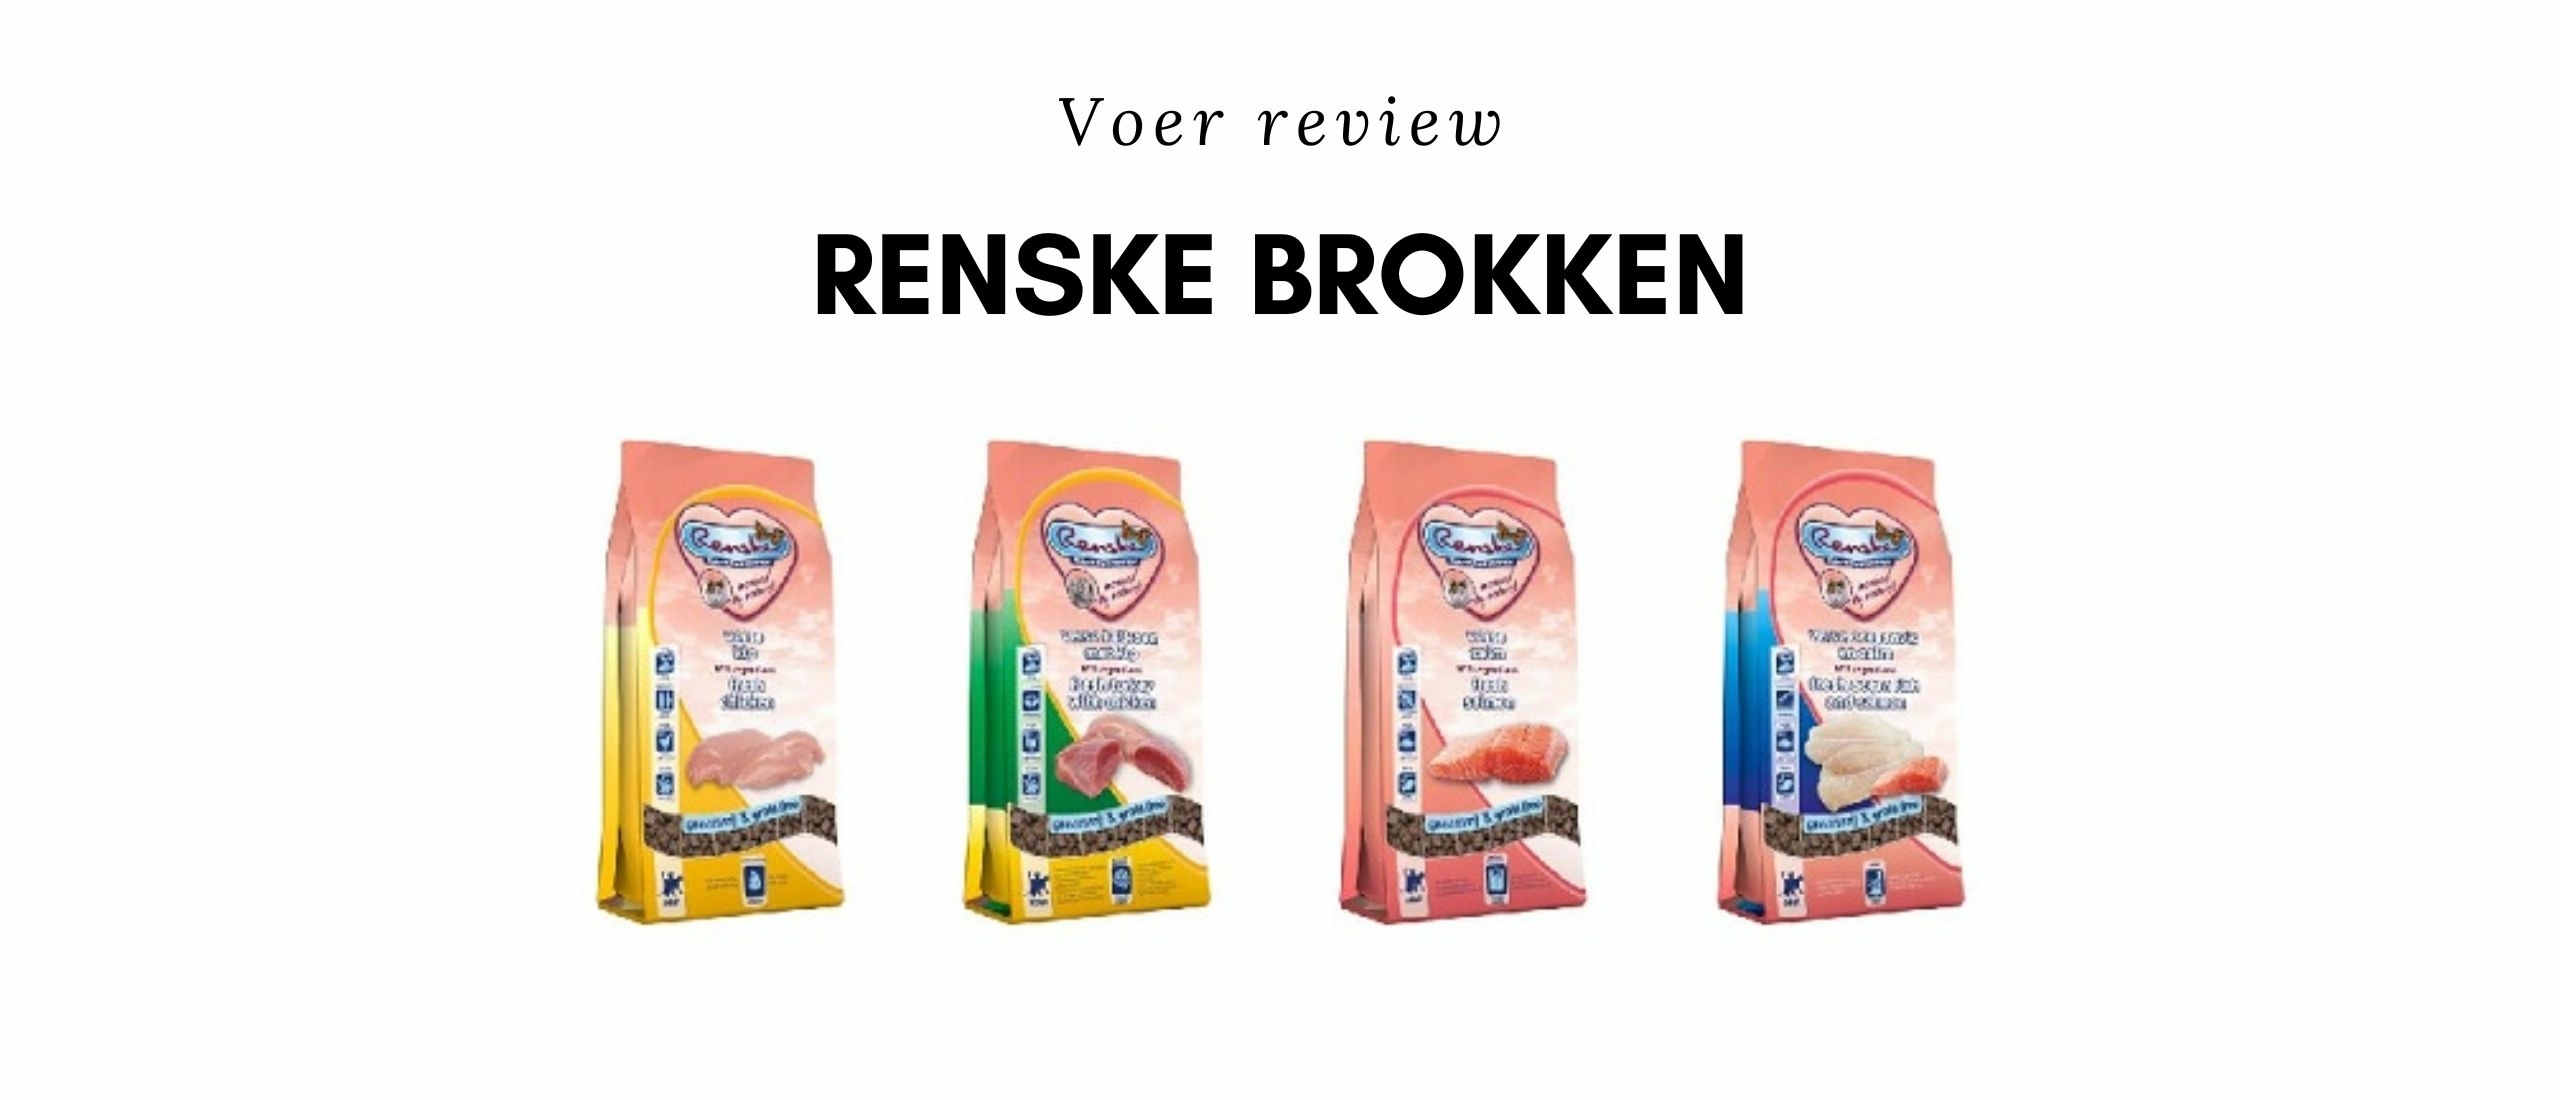 Voer review Renske Brok